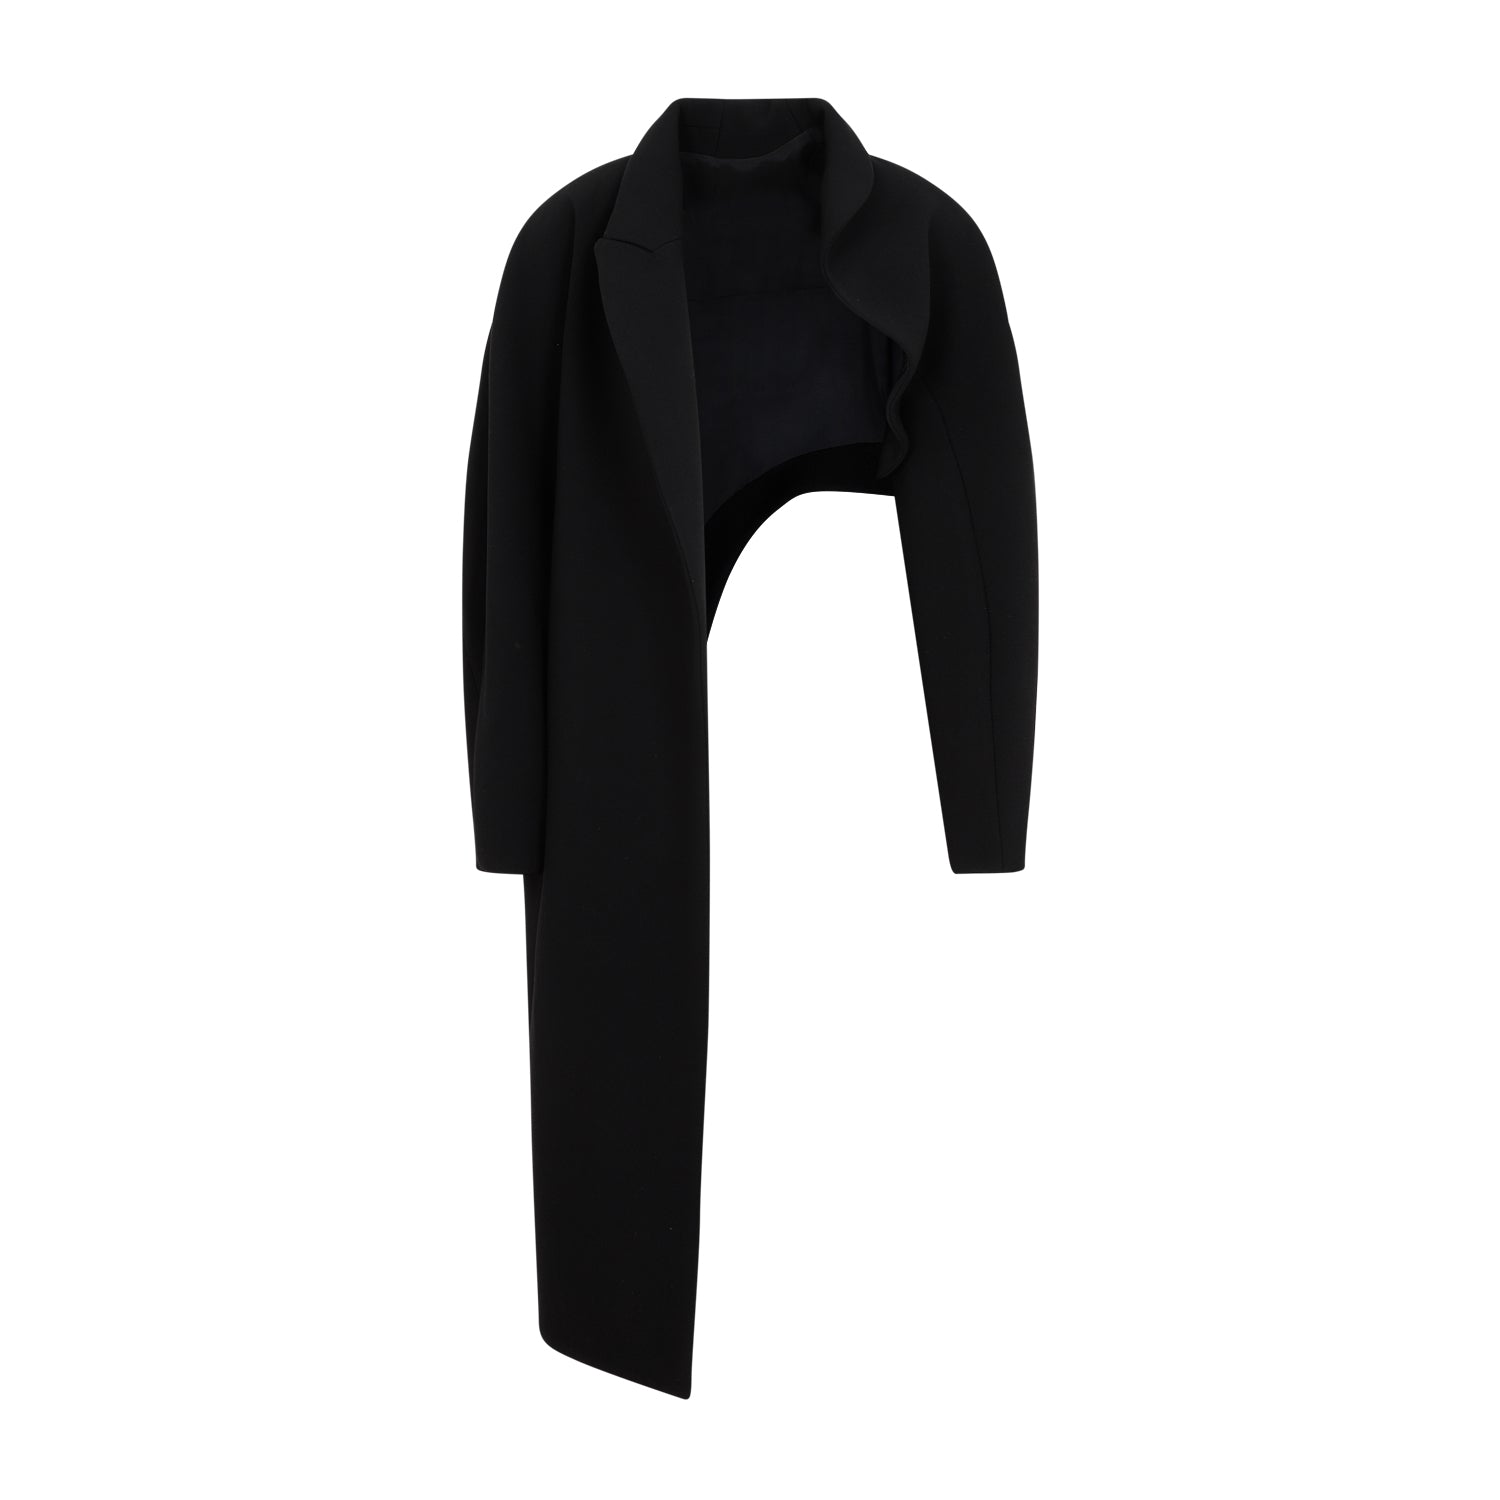 Alaïa Sleek And Chic Black Half Jacket For Women